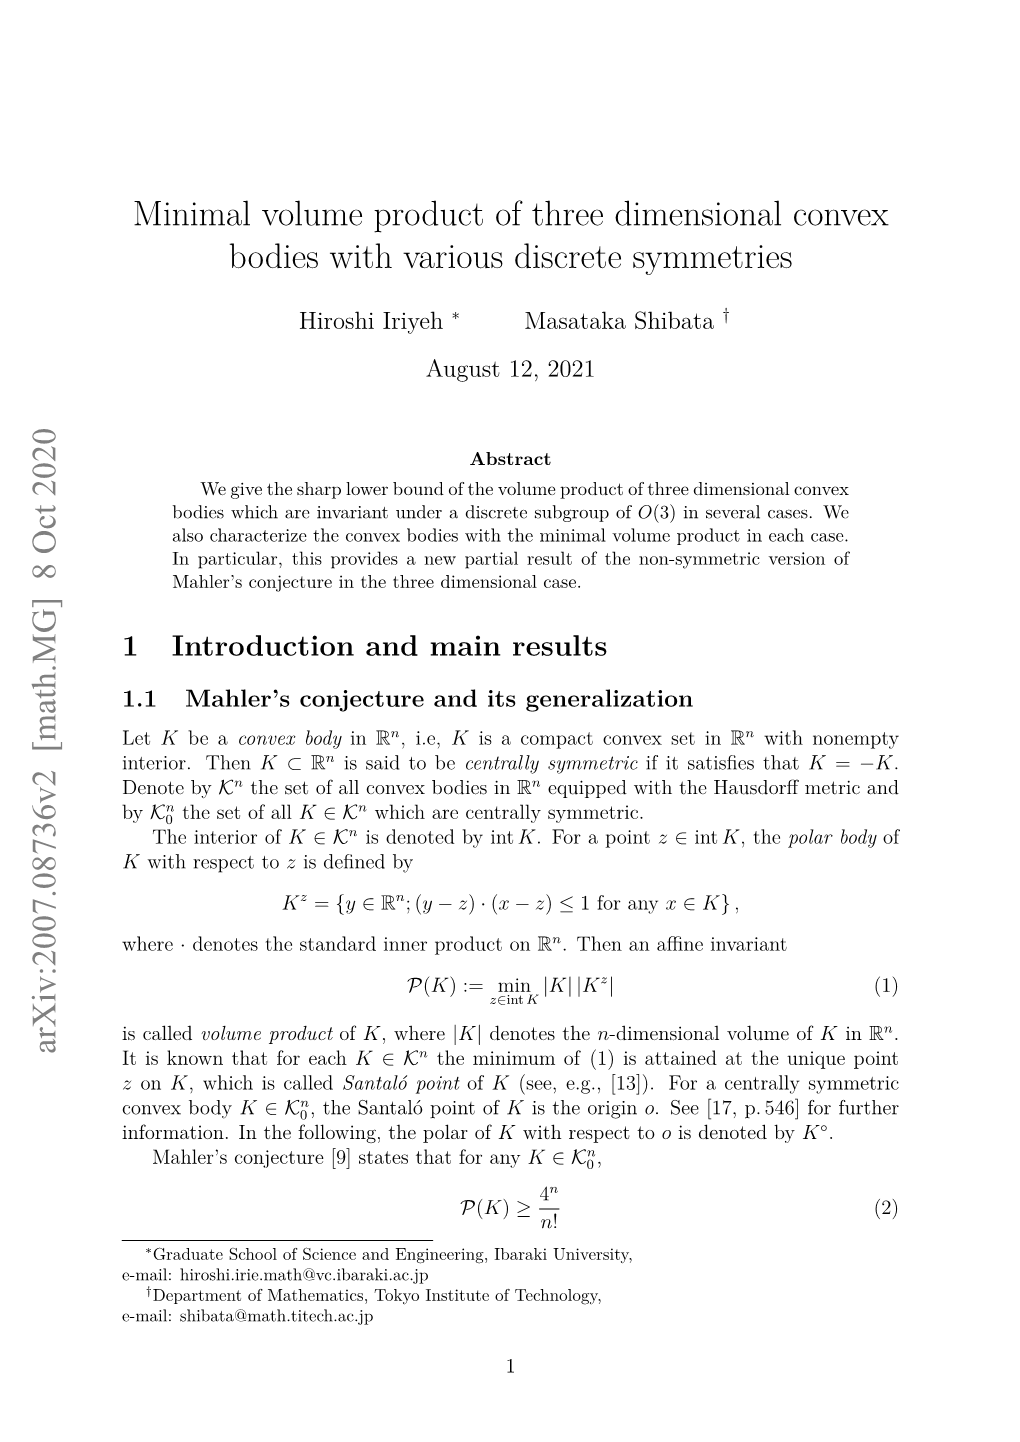 Minimal Volume Product of Three Dimensional Convex Bodies with Various Discrete Symmetries